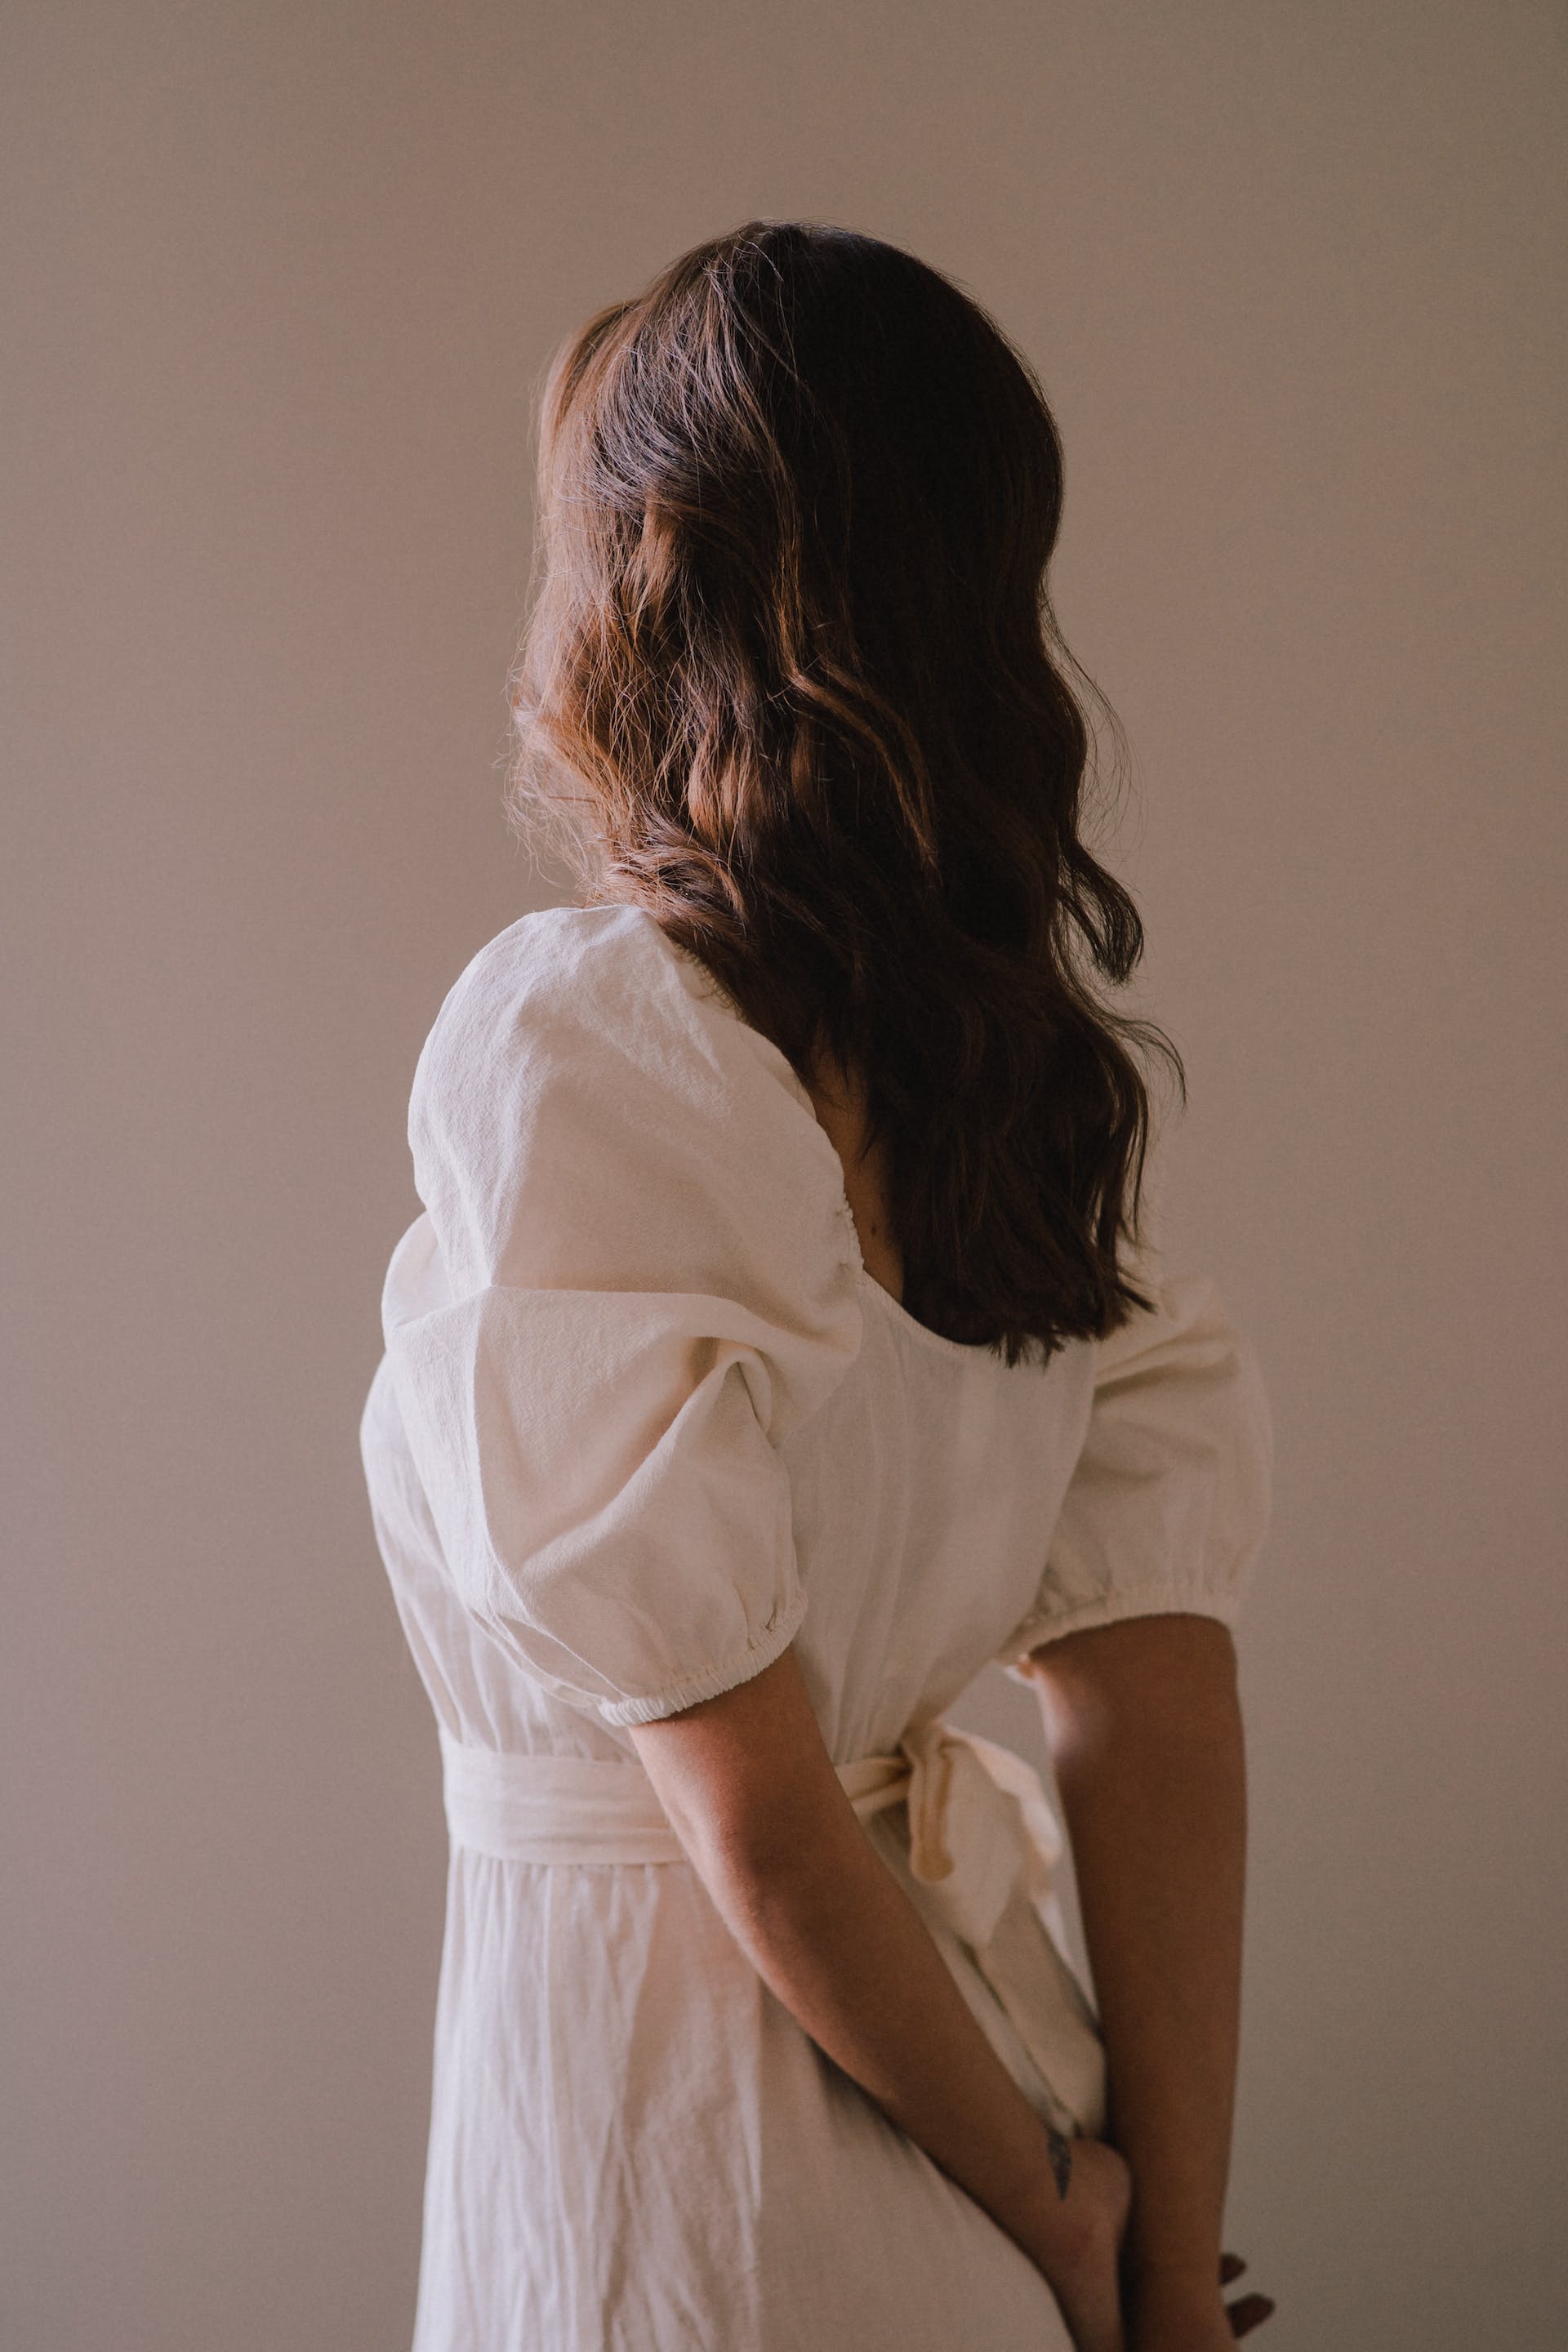 Femme debout en robe blanche | Source : Pexels